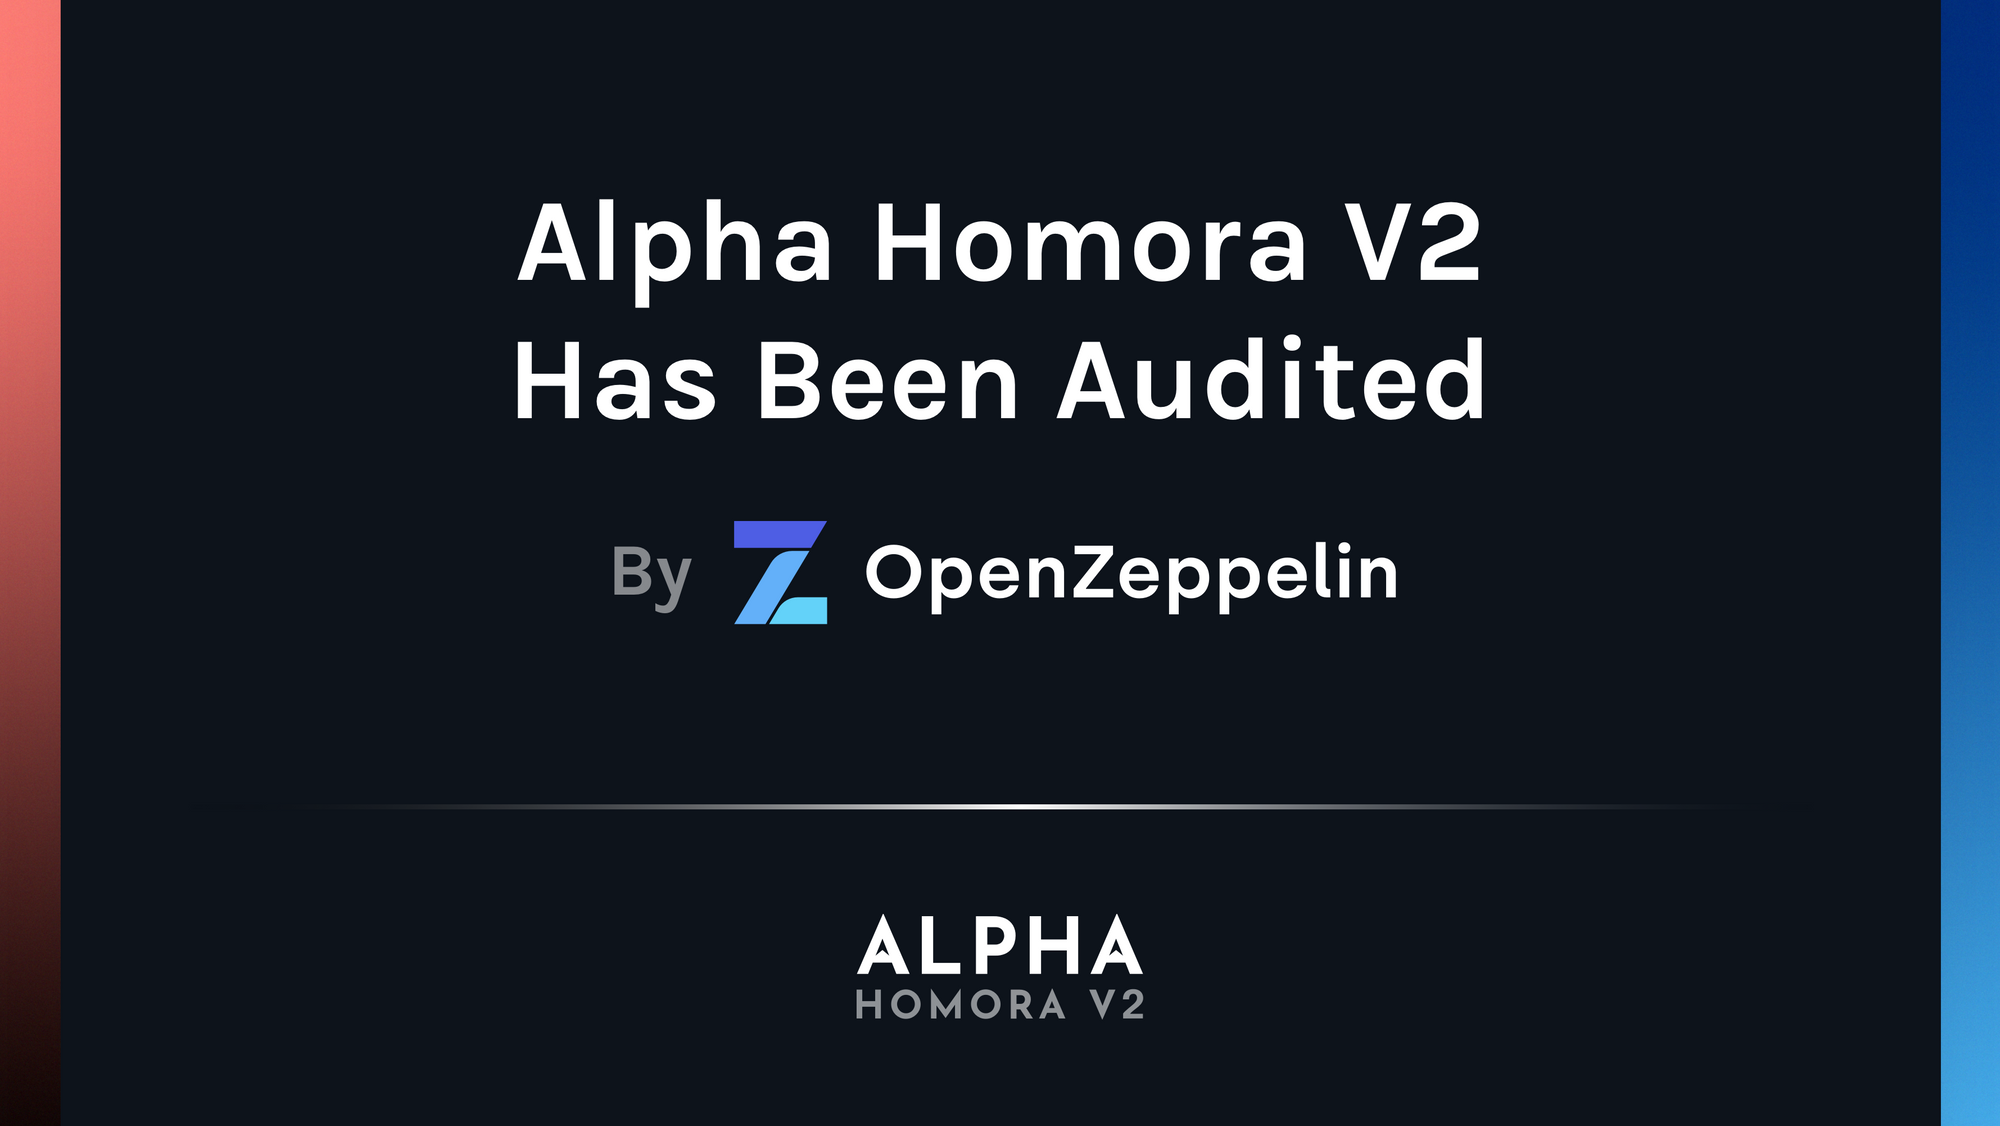 Alpha Homora V2 Has Been Audited By OpenZeppelin